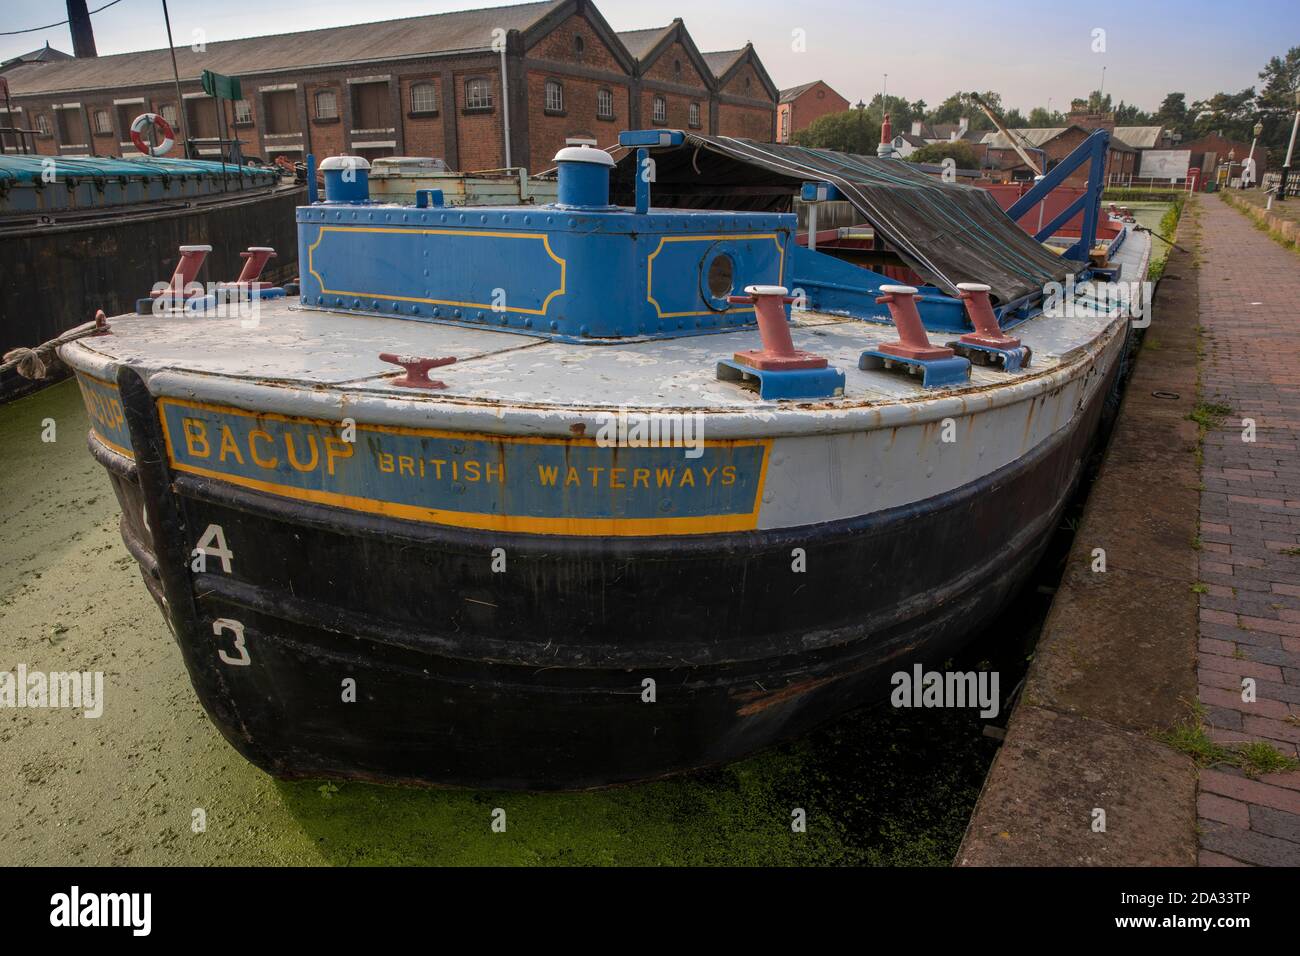 UK, England, Cheshire, Ellesmere Port, National Waterways Museum, Upper Basin, Bacup British Waterways board barge Stock Photo